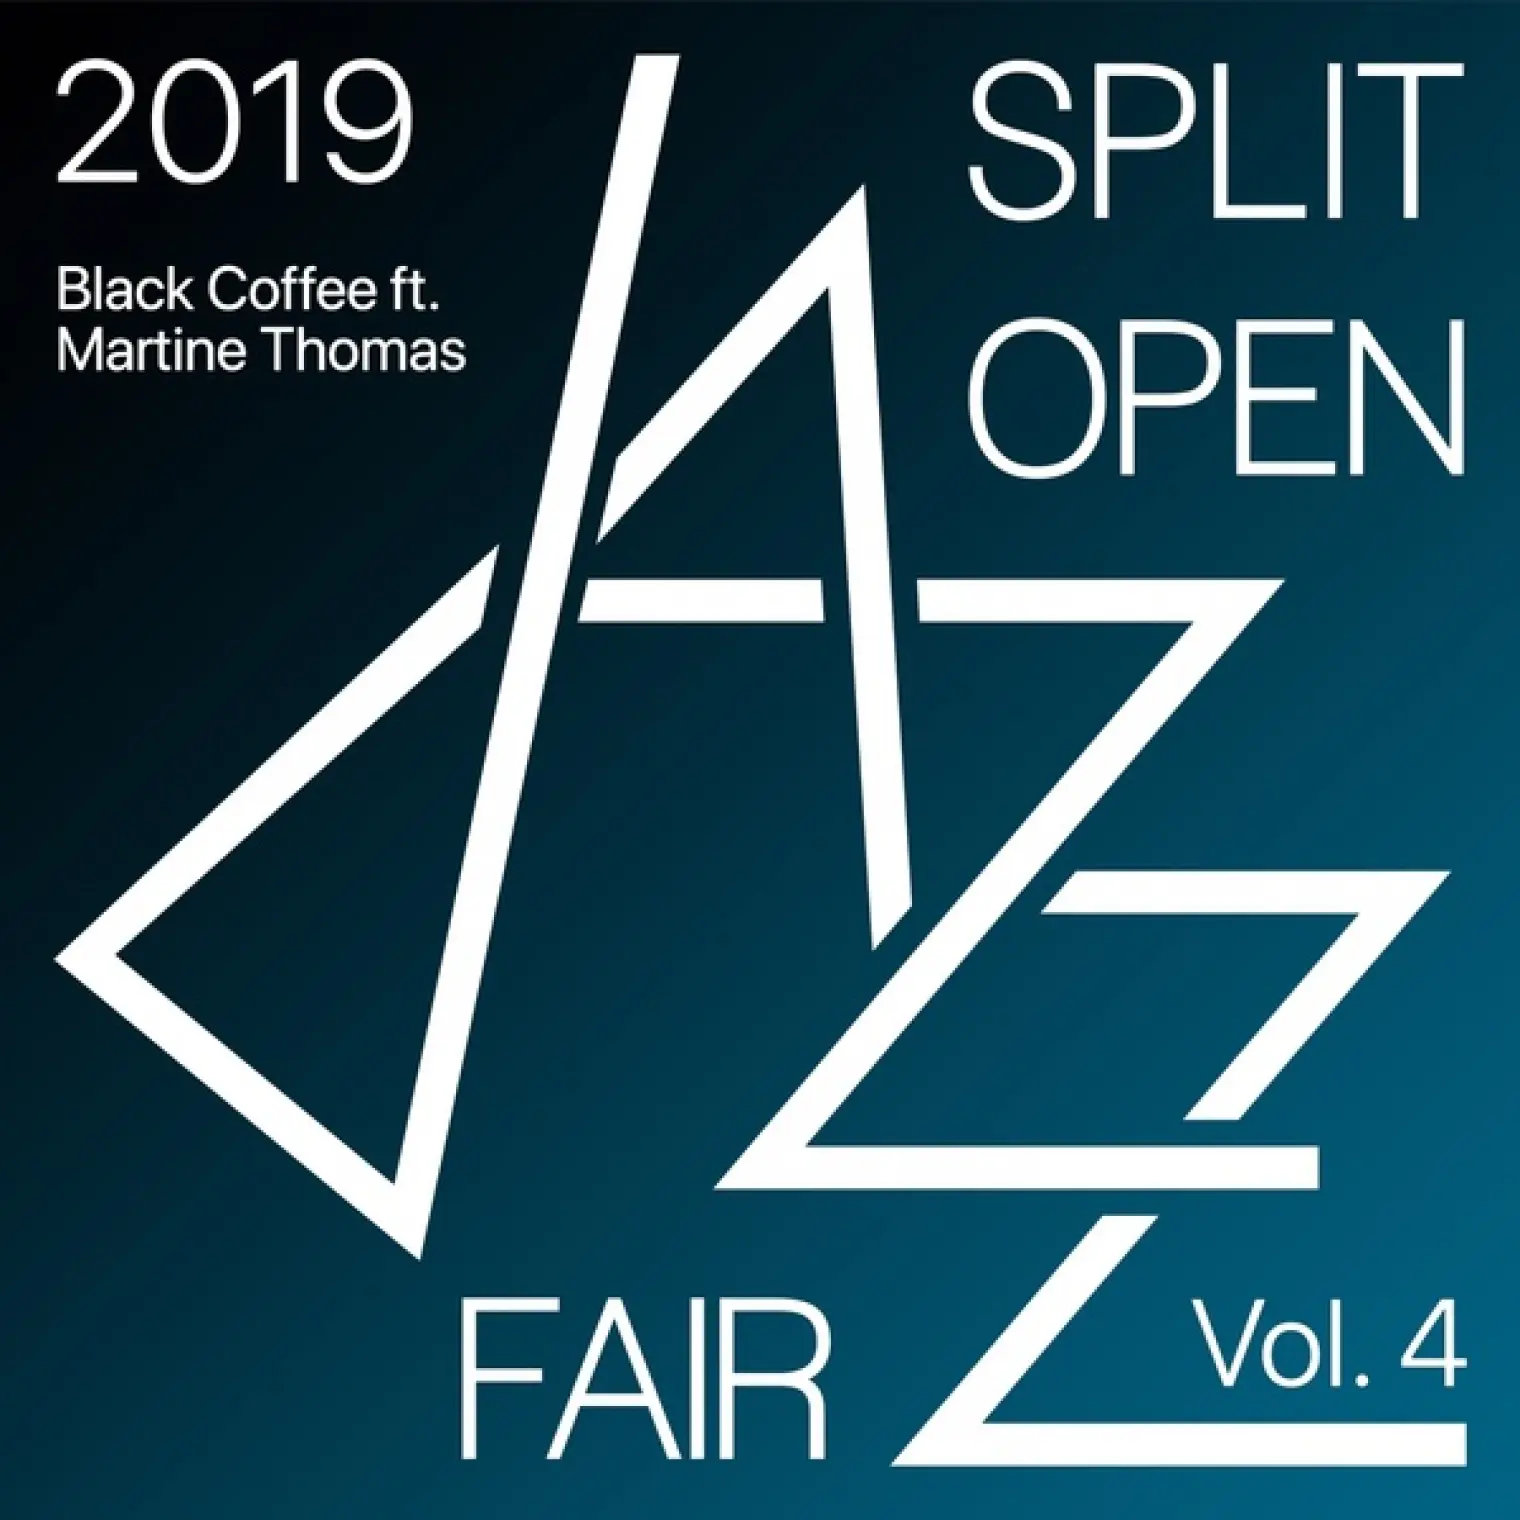 Split open jazz fair 2019 Vol. 4 (feat. Martine Thomas) (Live) -  Black Coffee  